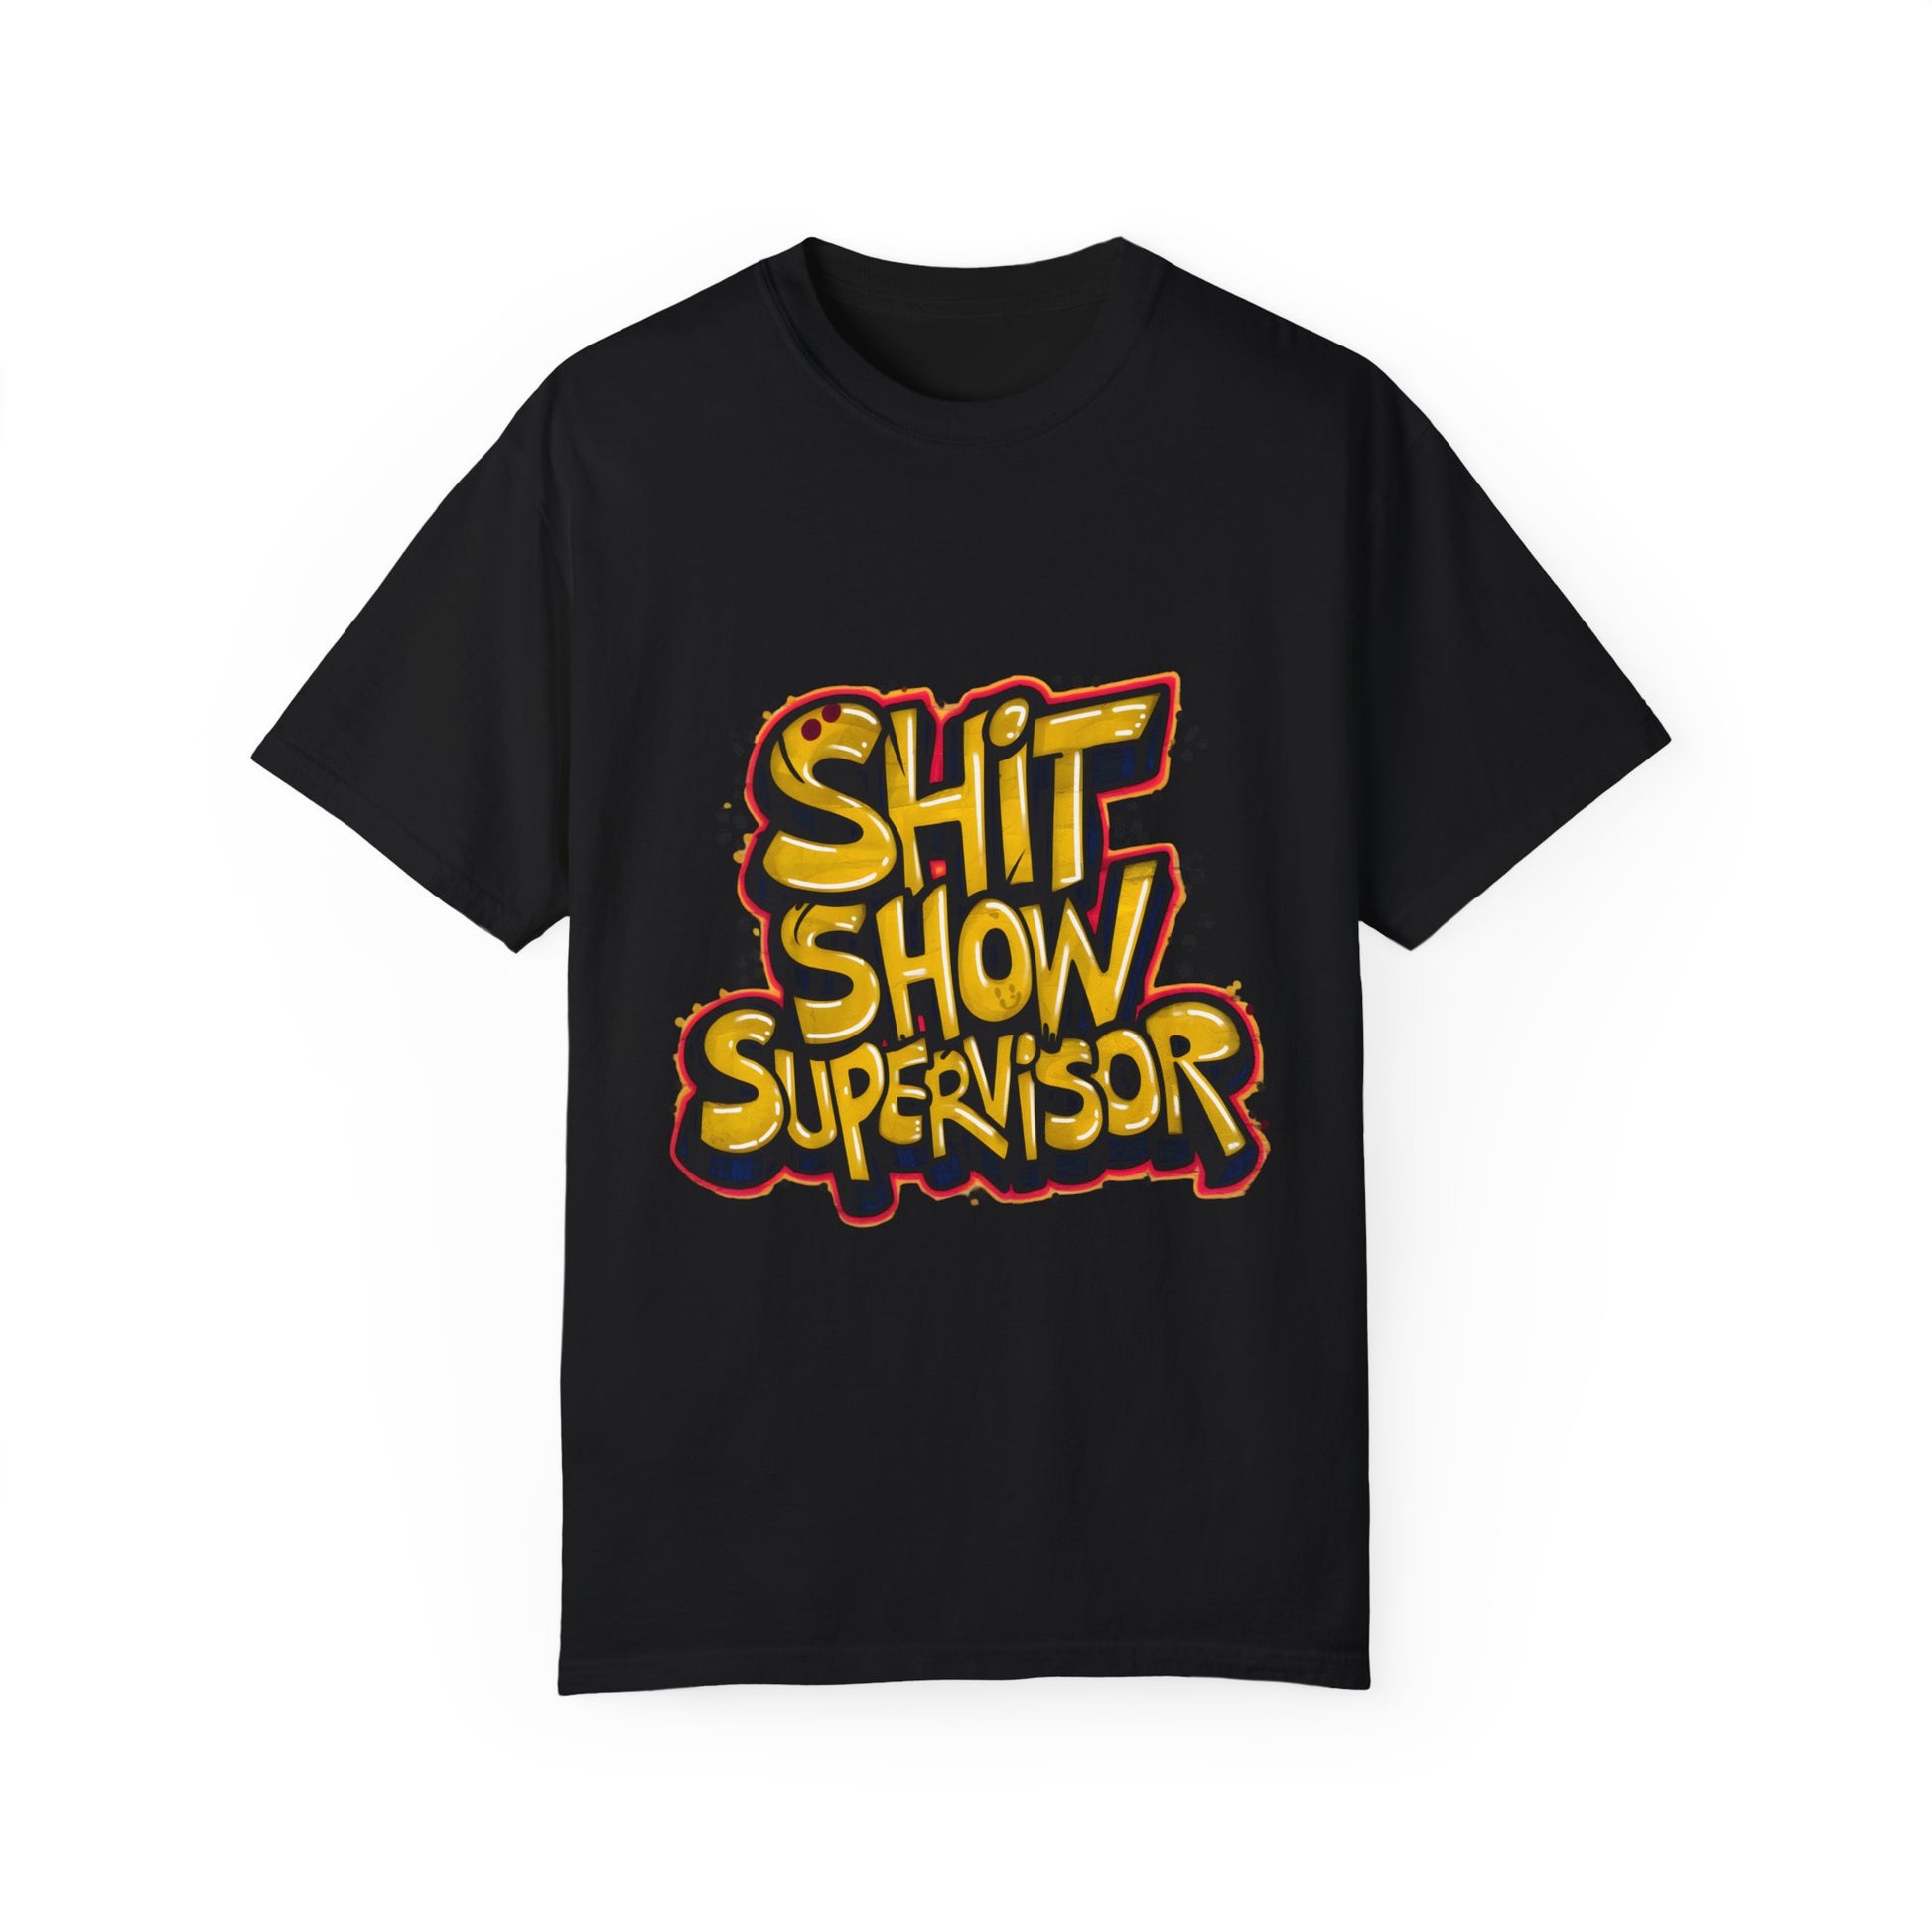 Shit Show Supervisor Urban Sarcastic Graphic Unisex Garment Dyed T-shirt Cotton Funny Humorous Graphic Soft Premium Unisex Men Women Black T-shirt Birthday Gift-1